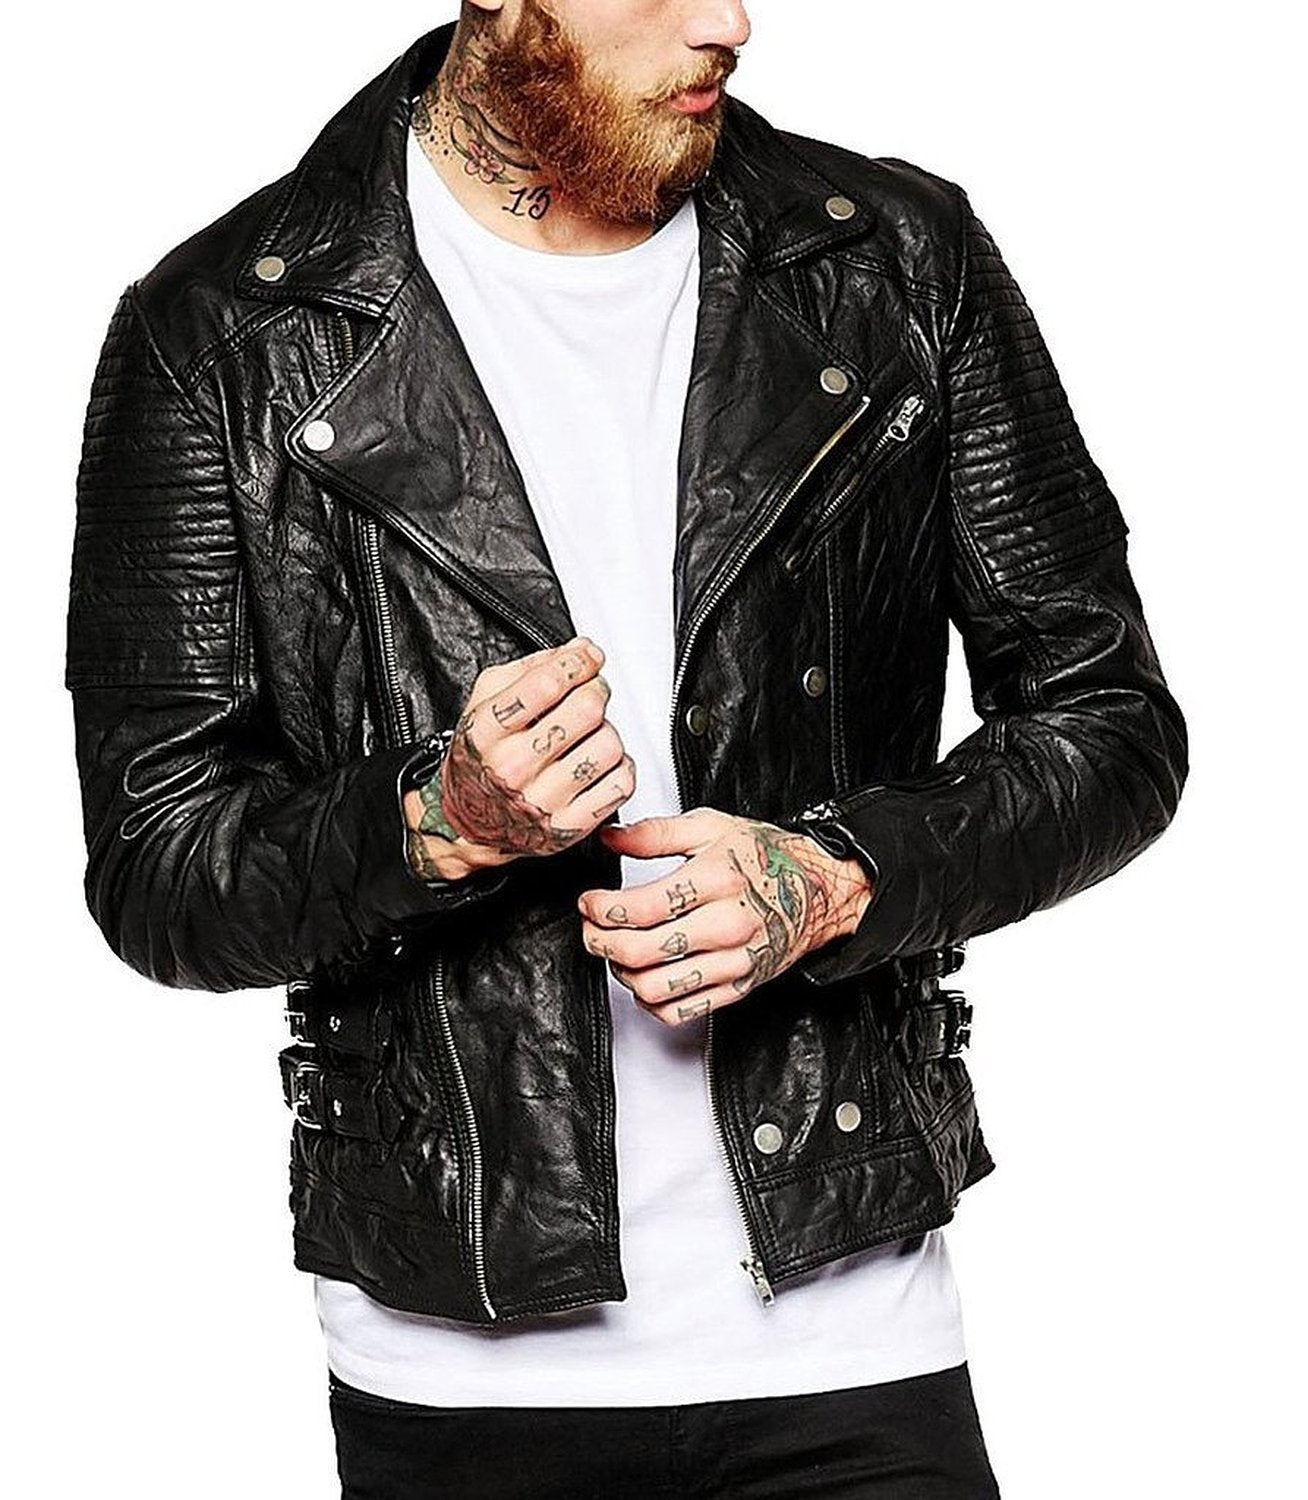 Leather Jackets Hub Mens Genuine Lambskin Leather Jacket (Black, Rocker Jacket) - 1501142